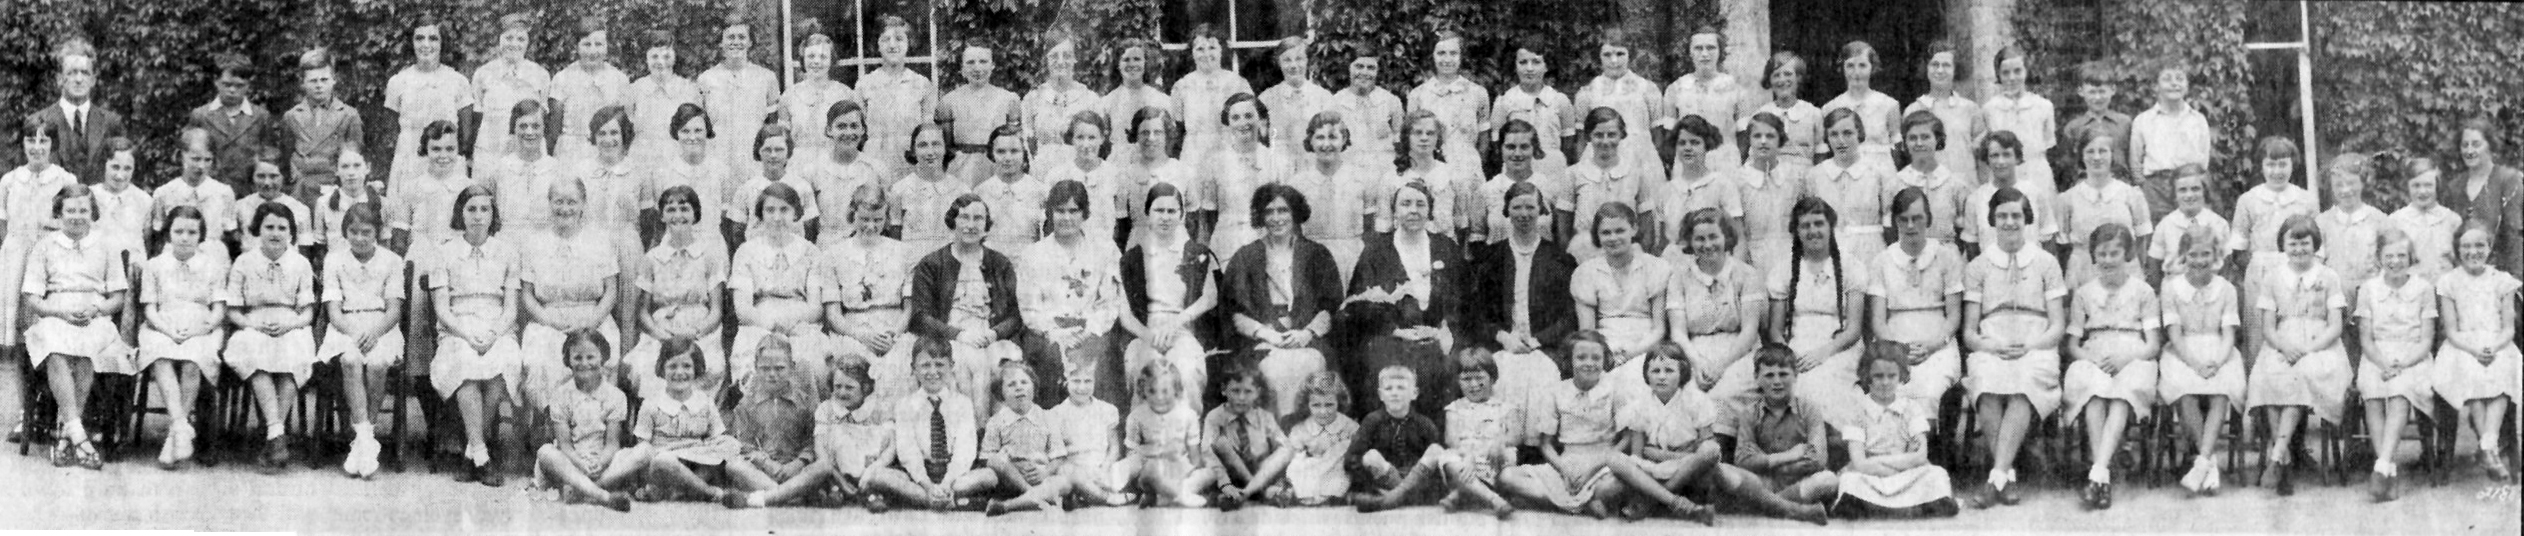 Horwell Girls Grammar School 1935.